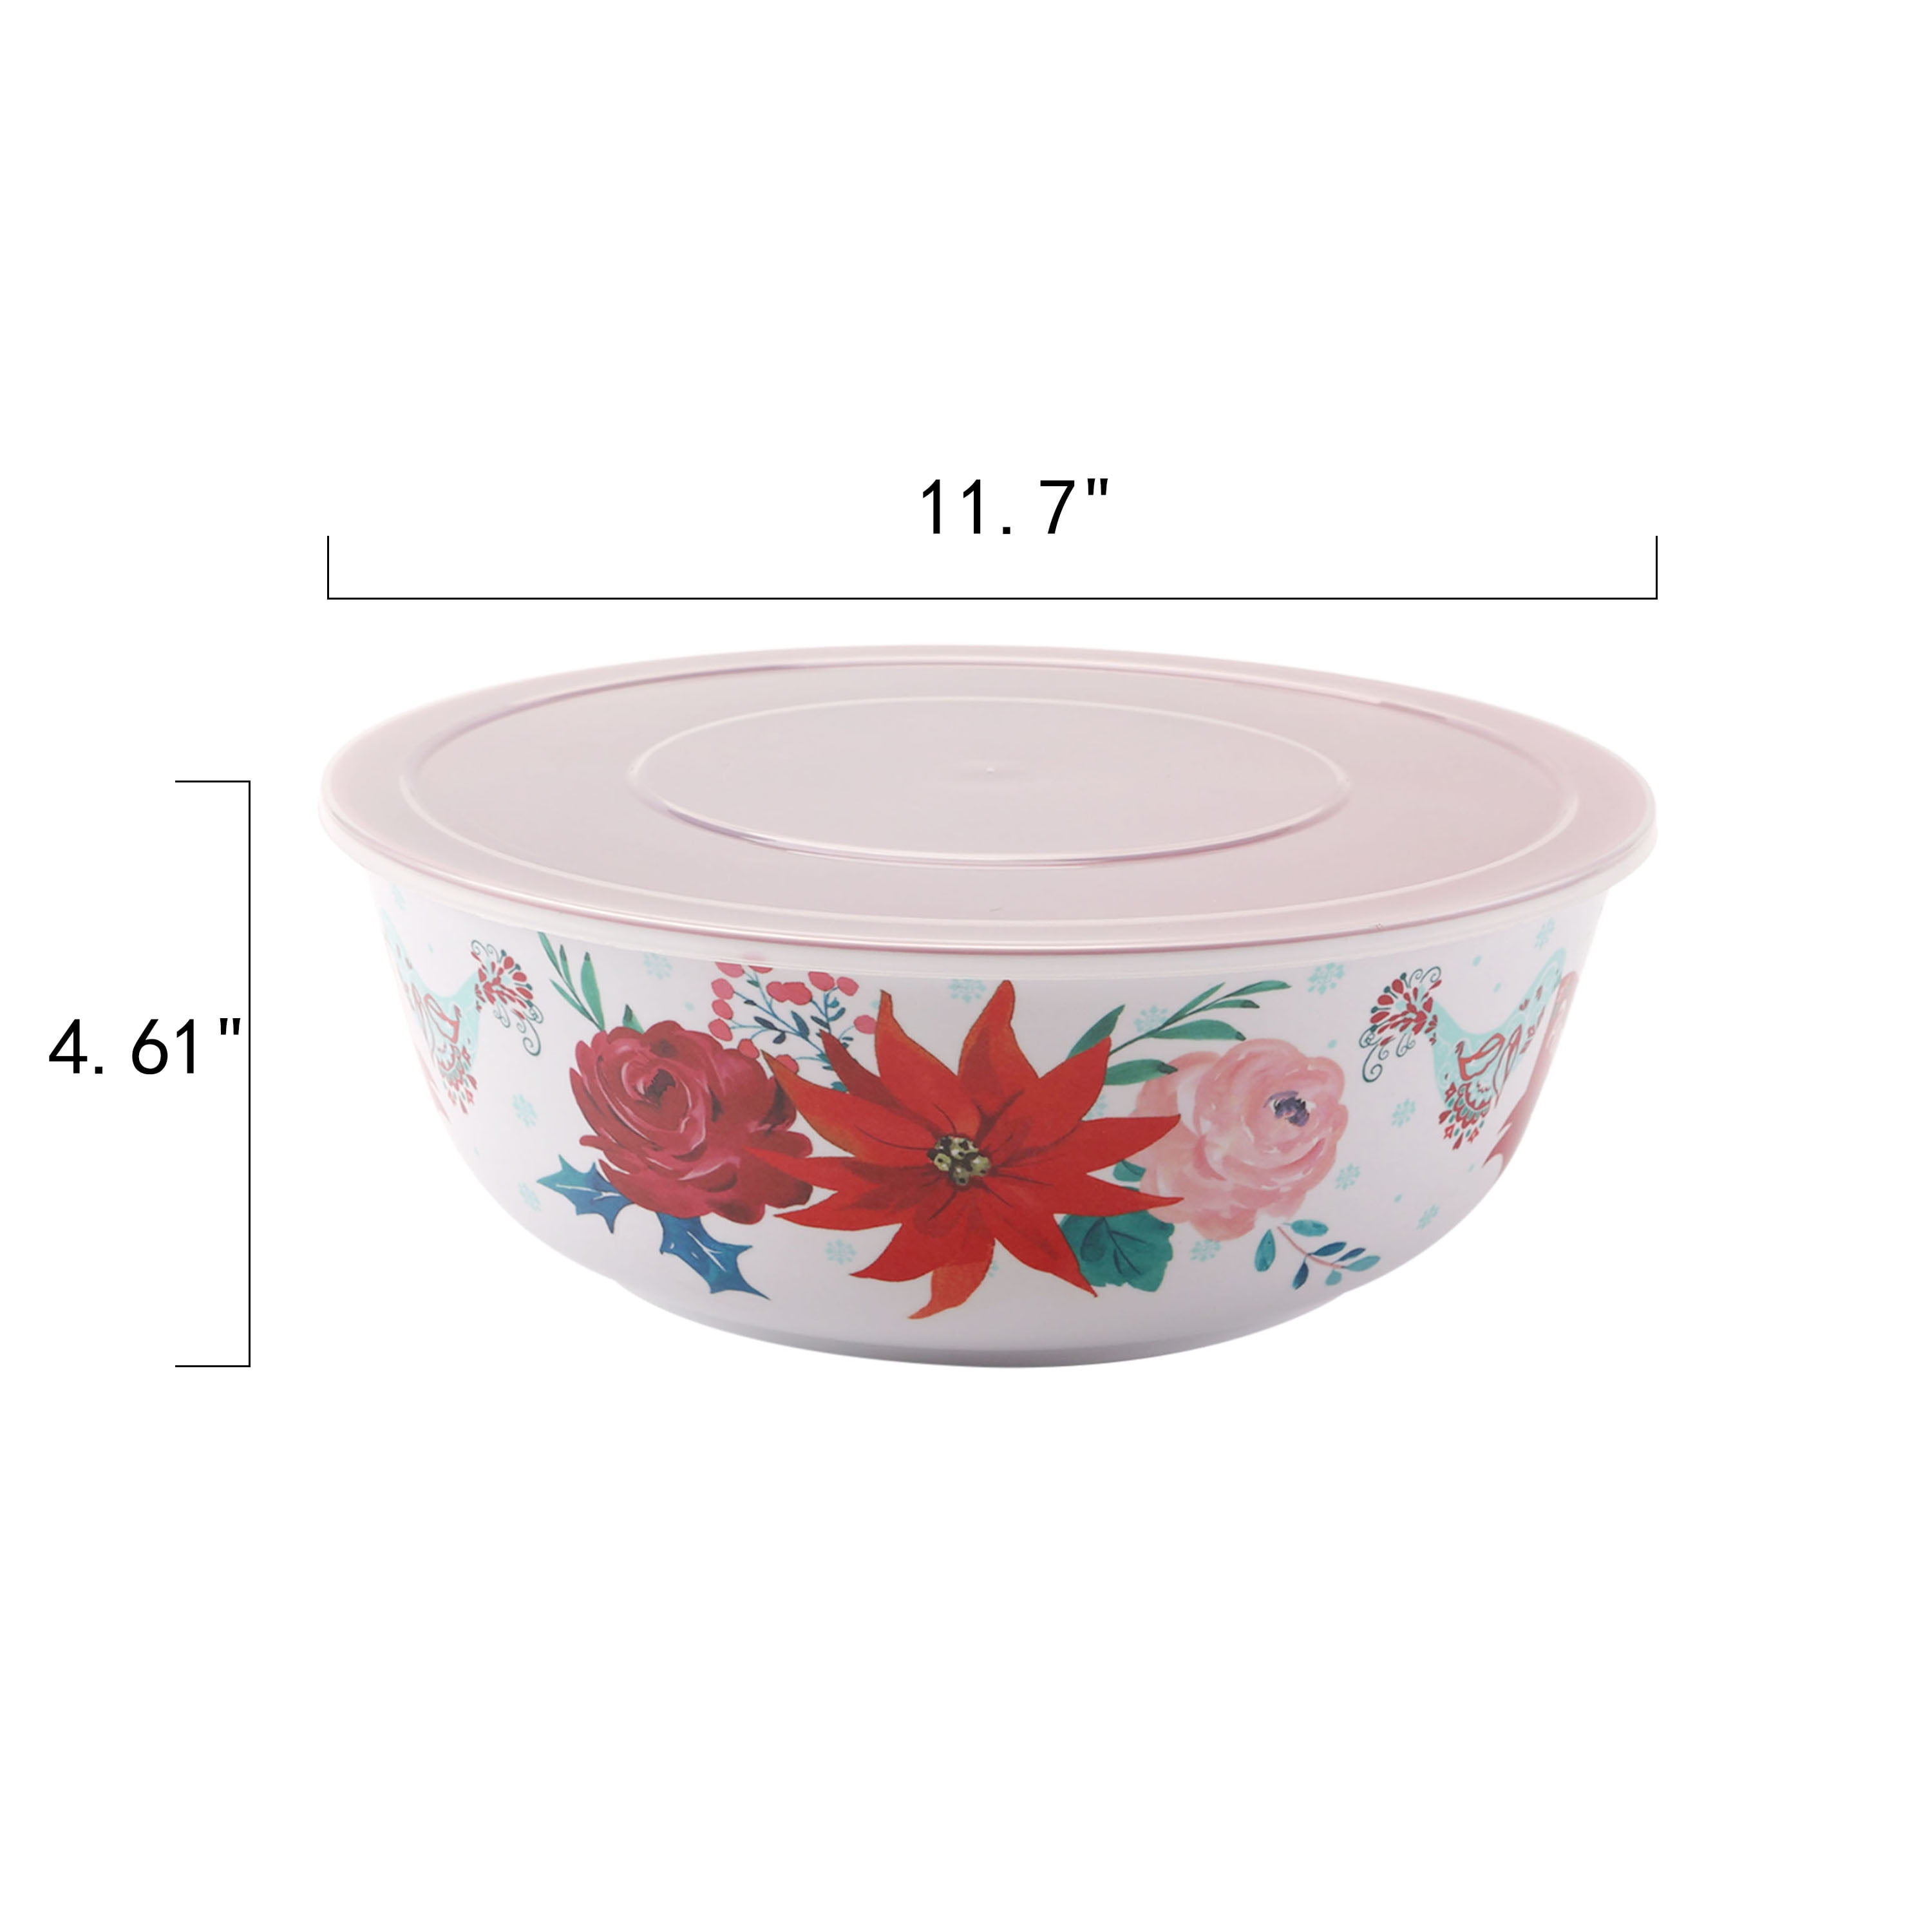 The Pioneer Woman Mazie Round Ceramic Nesting Bowl Set - 6 ct